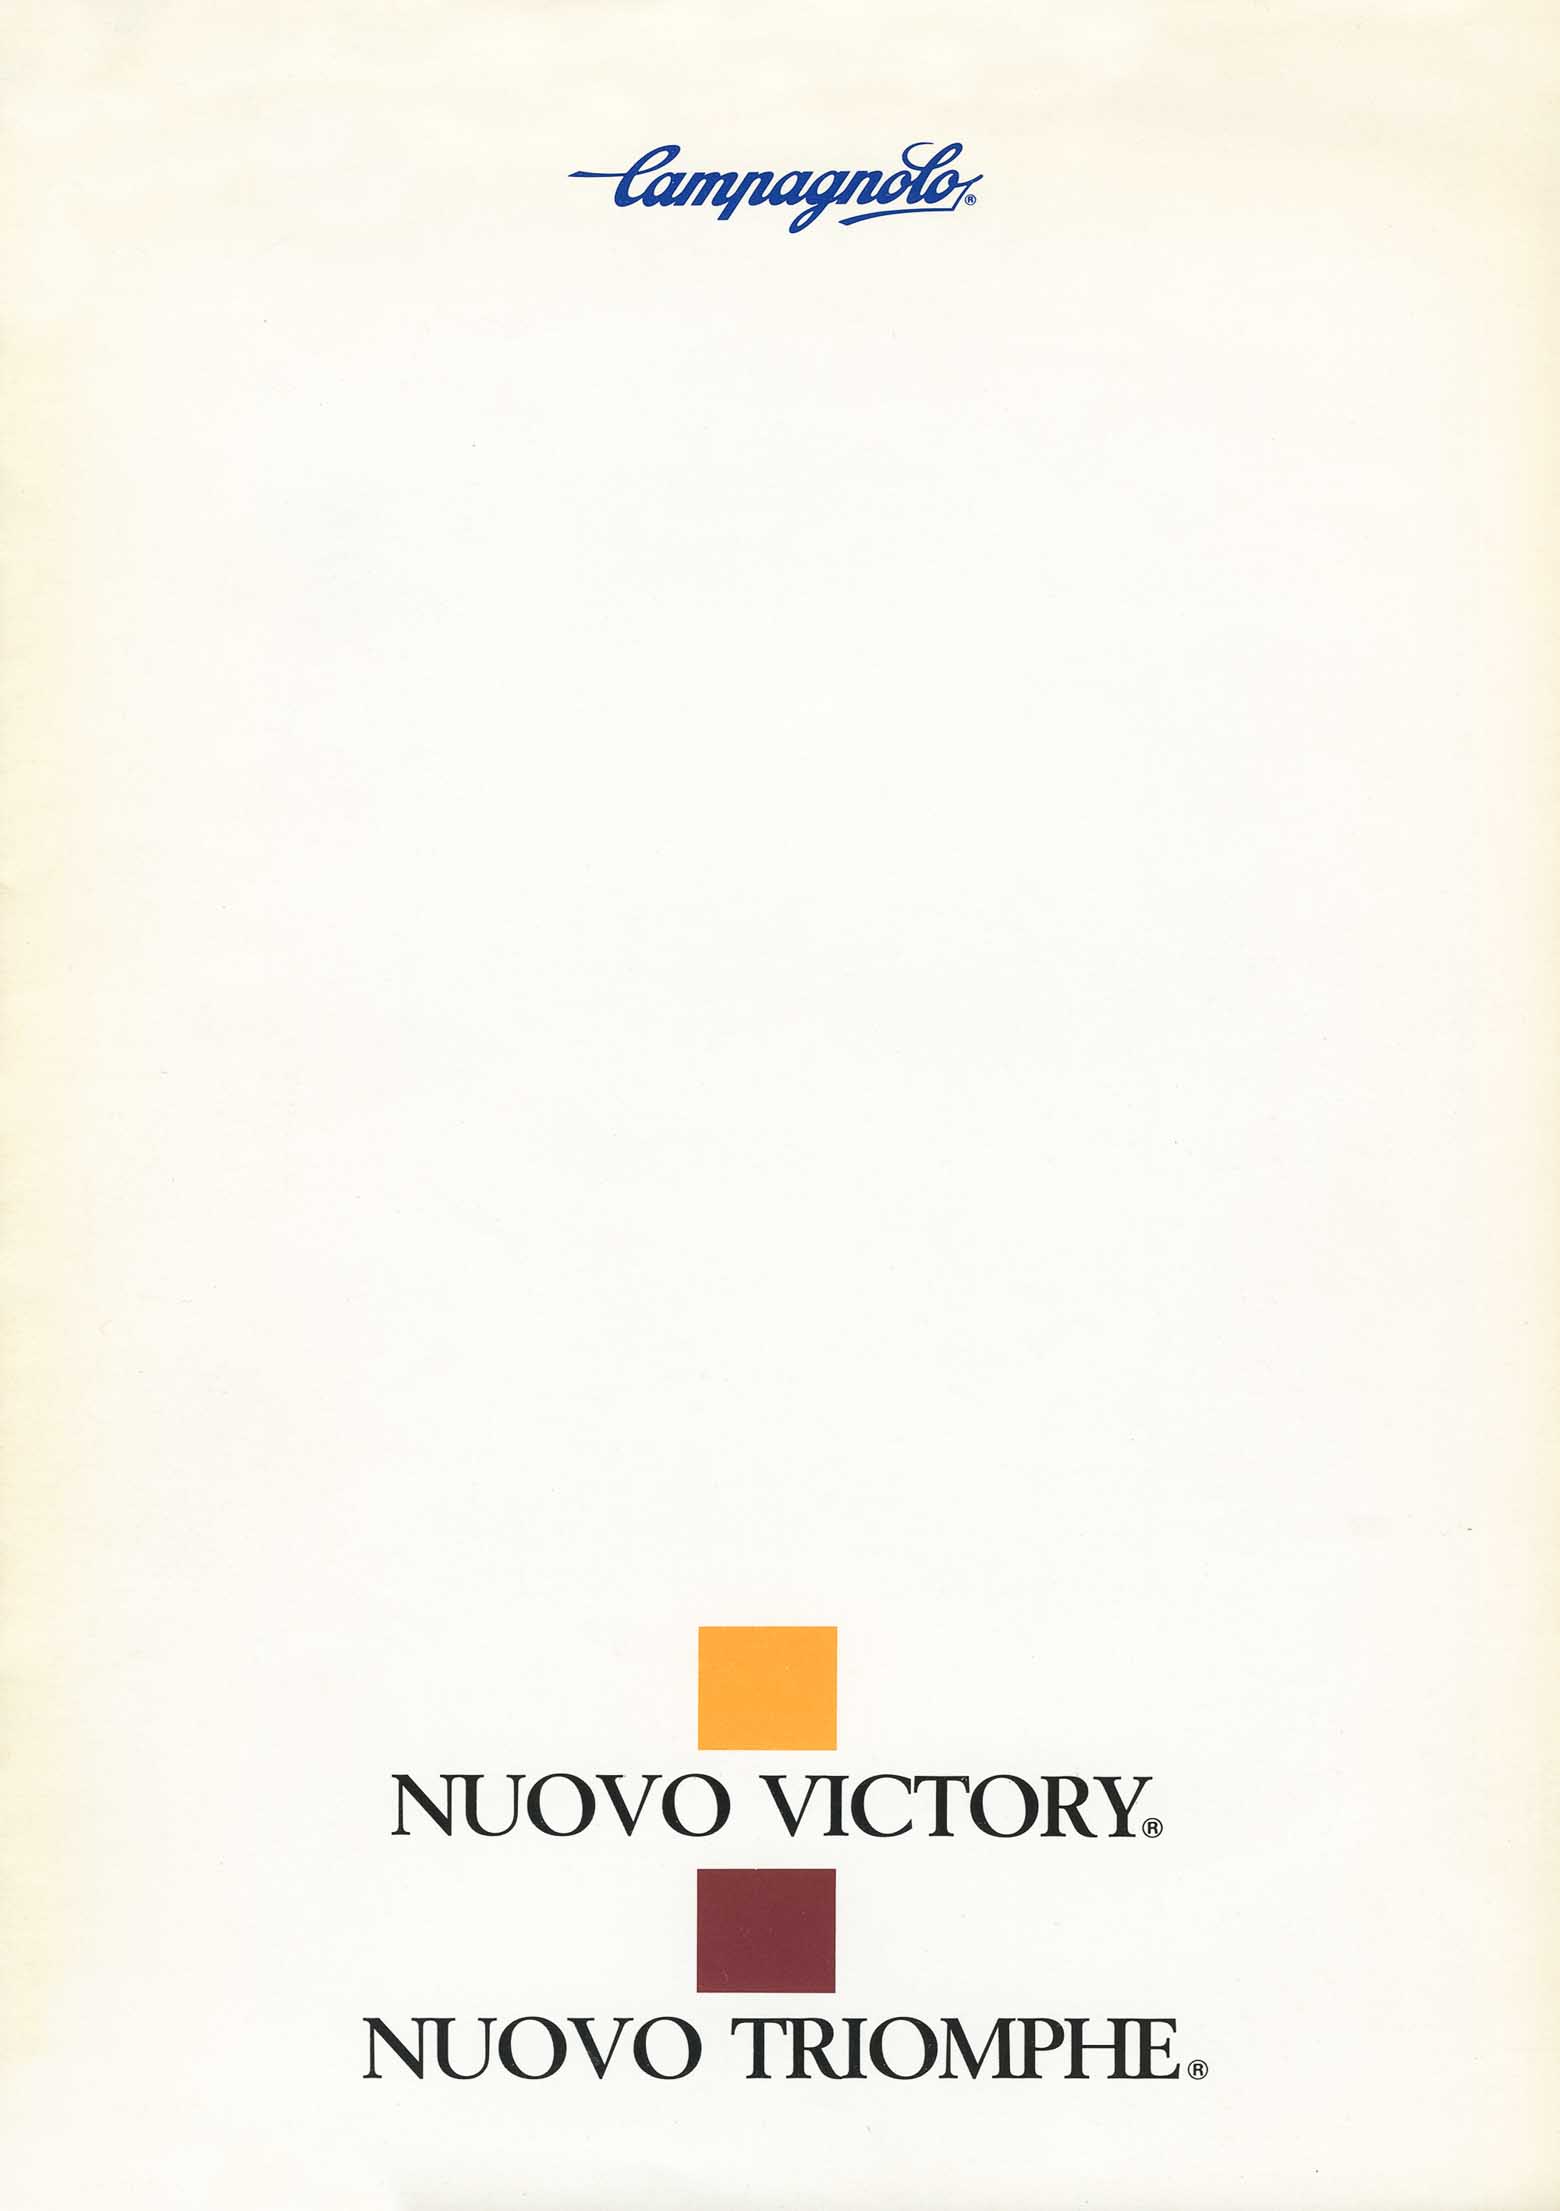 Campagnolo - Nuovo Victory, Nuovo Triomphe Nov 1986 scan 01 main image